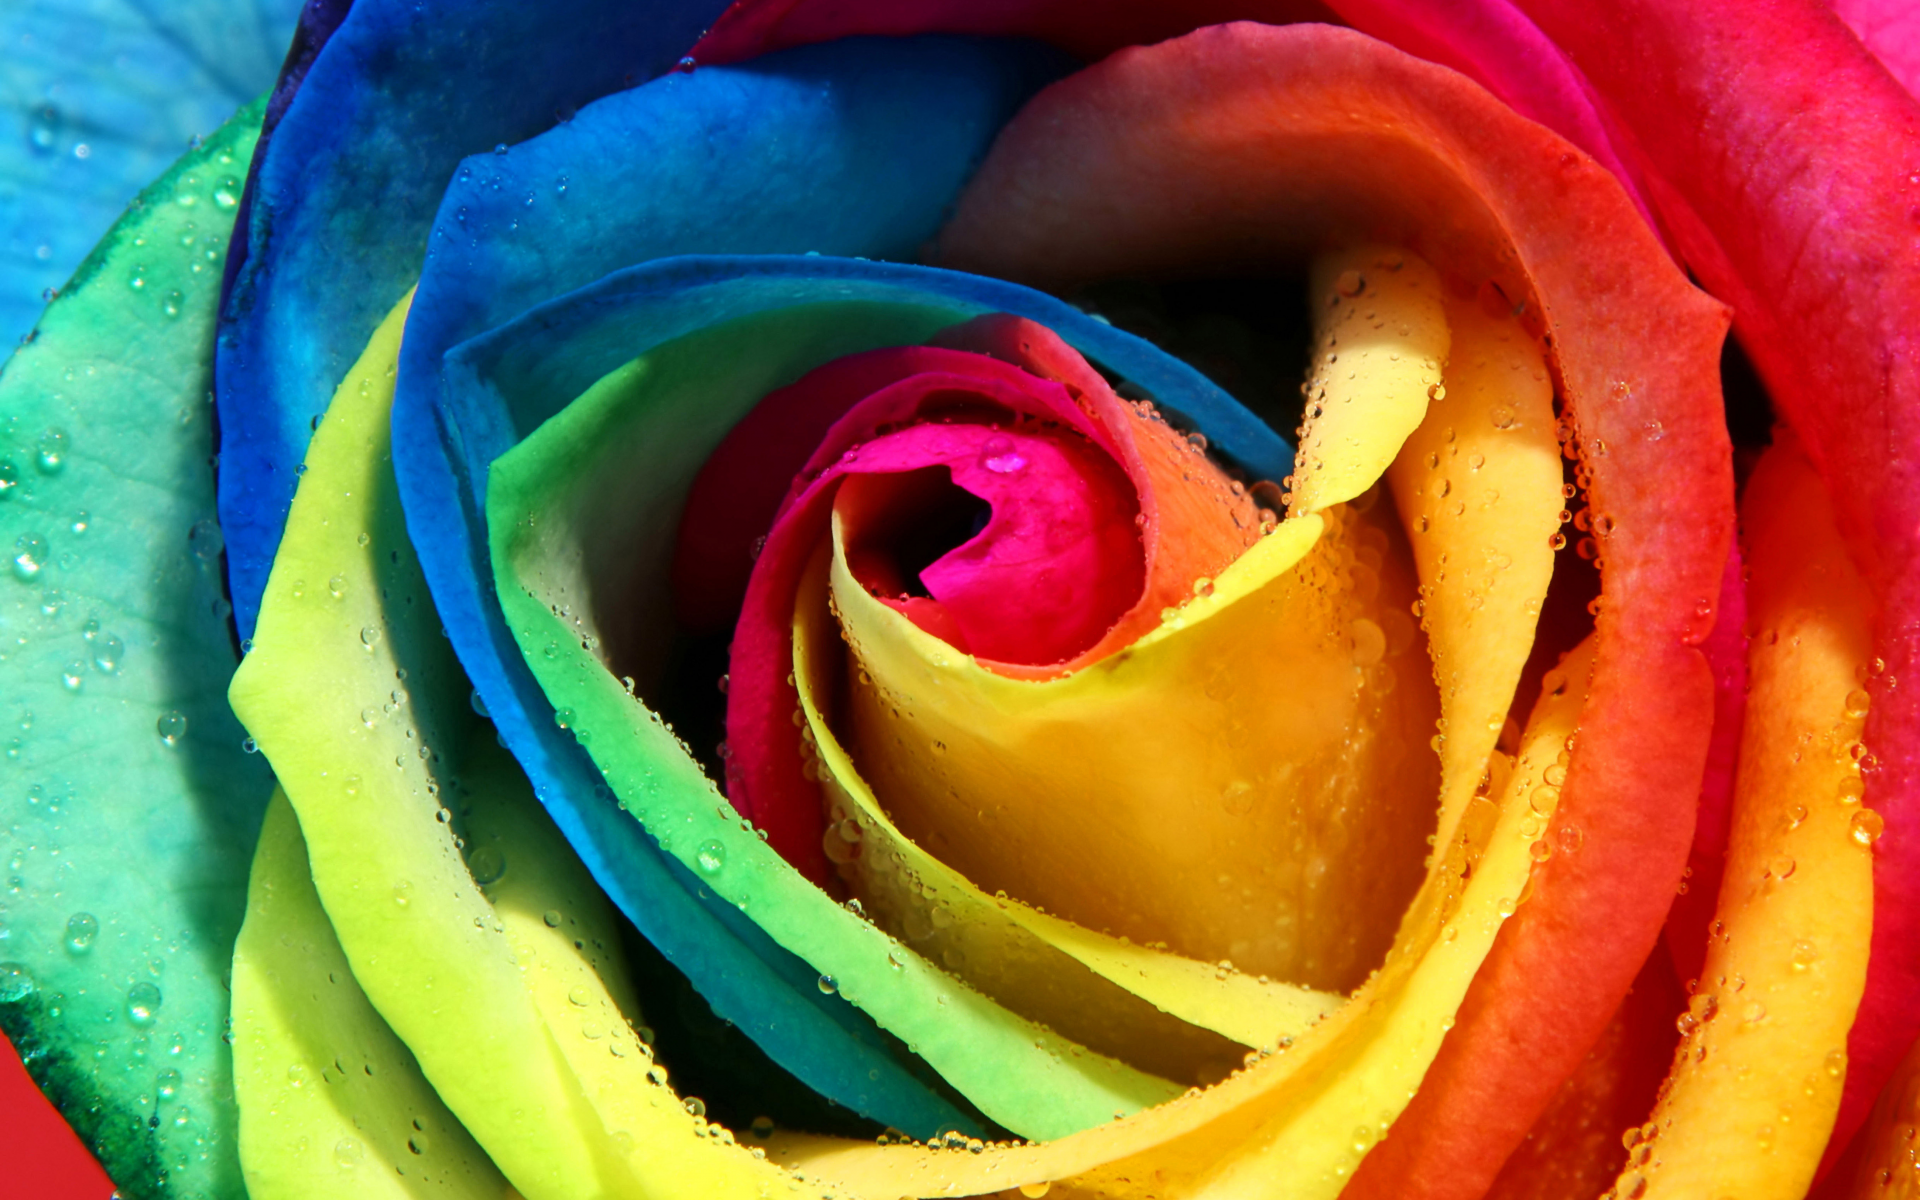 разноцветная, бутон, роза, роса, радужная, лепестки